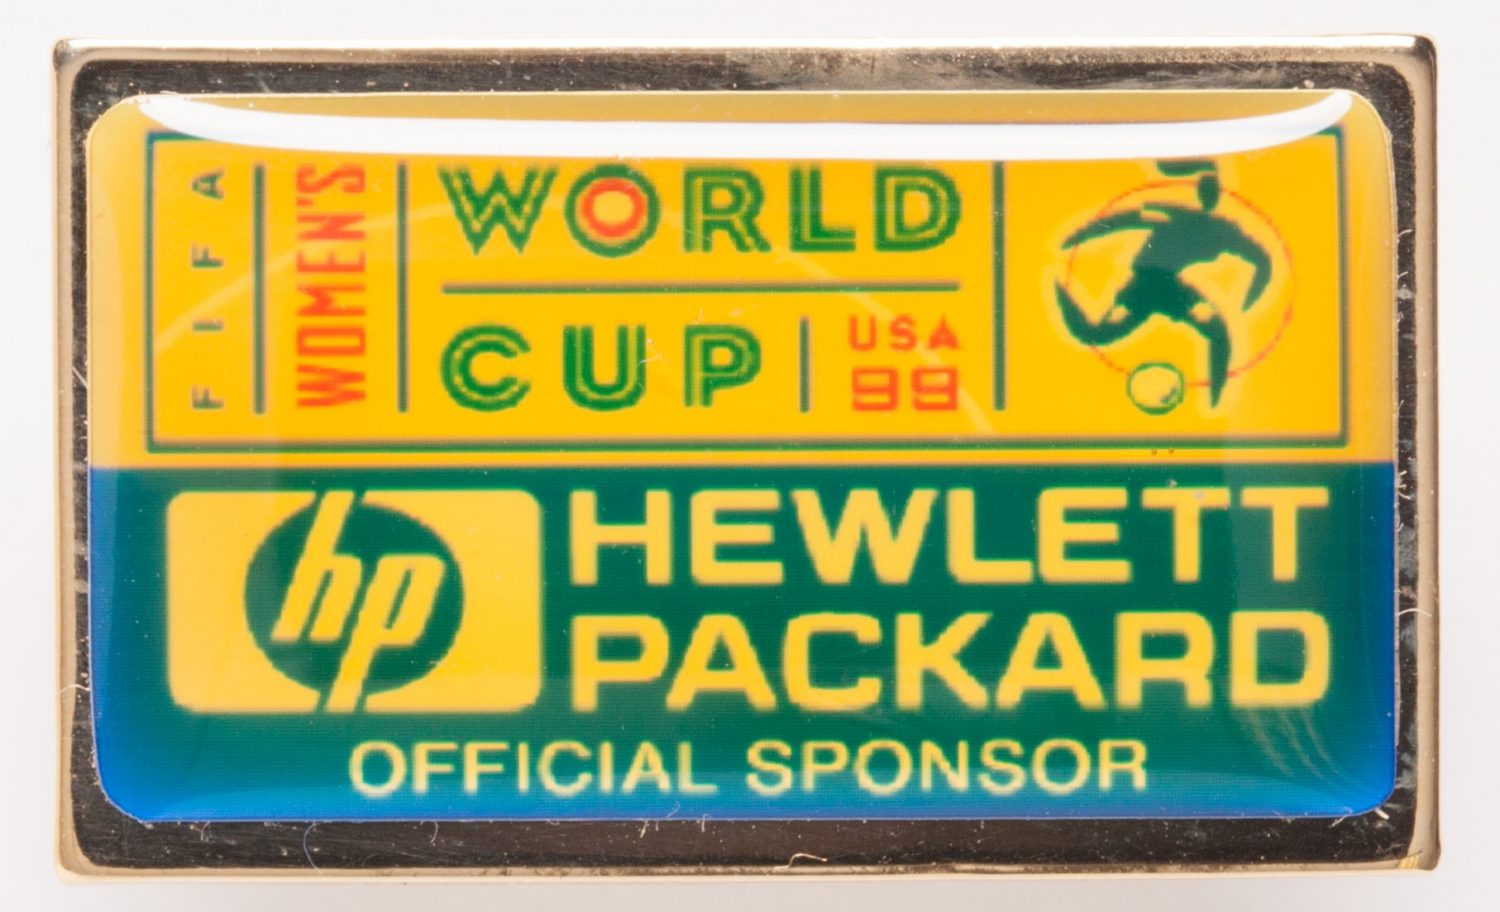 Pin celebrating Hewlett-Packard as a sponsor of the 1999 Women's World Cup.